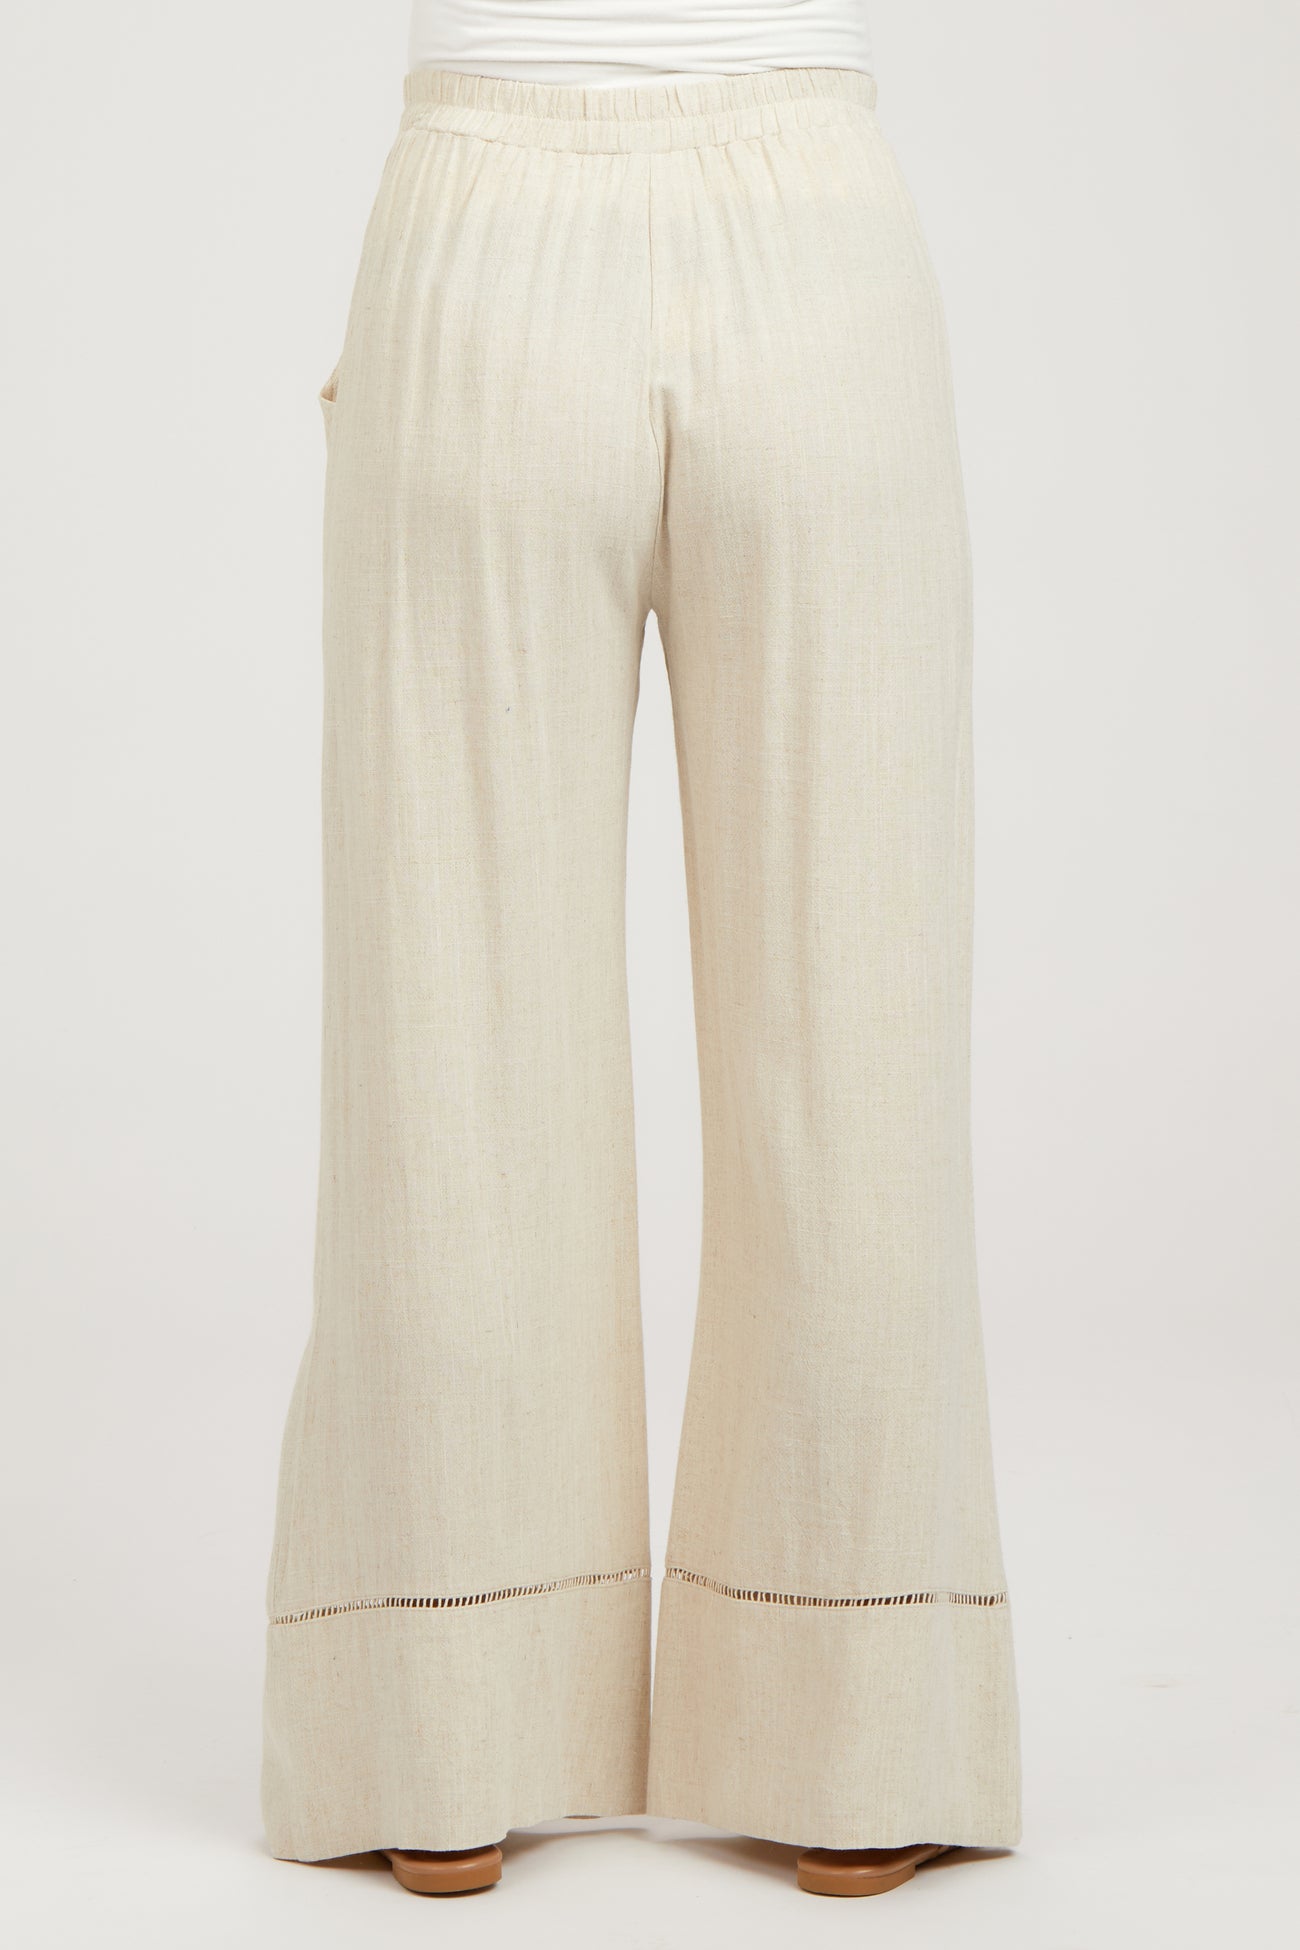 gvdentm Maternity Pants Women Cotton Linen Pants Casual Drawstring